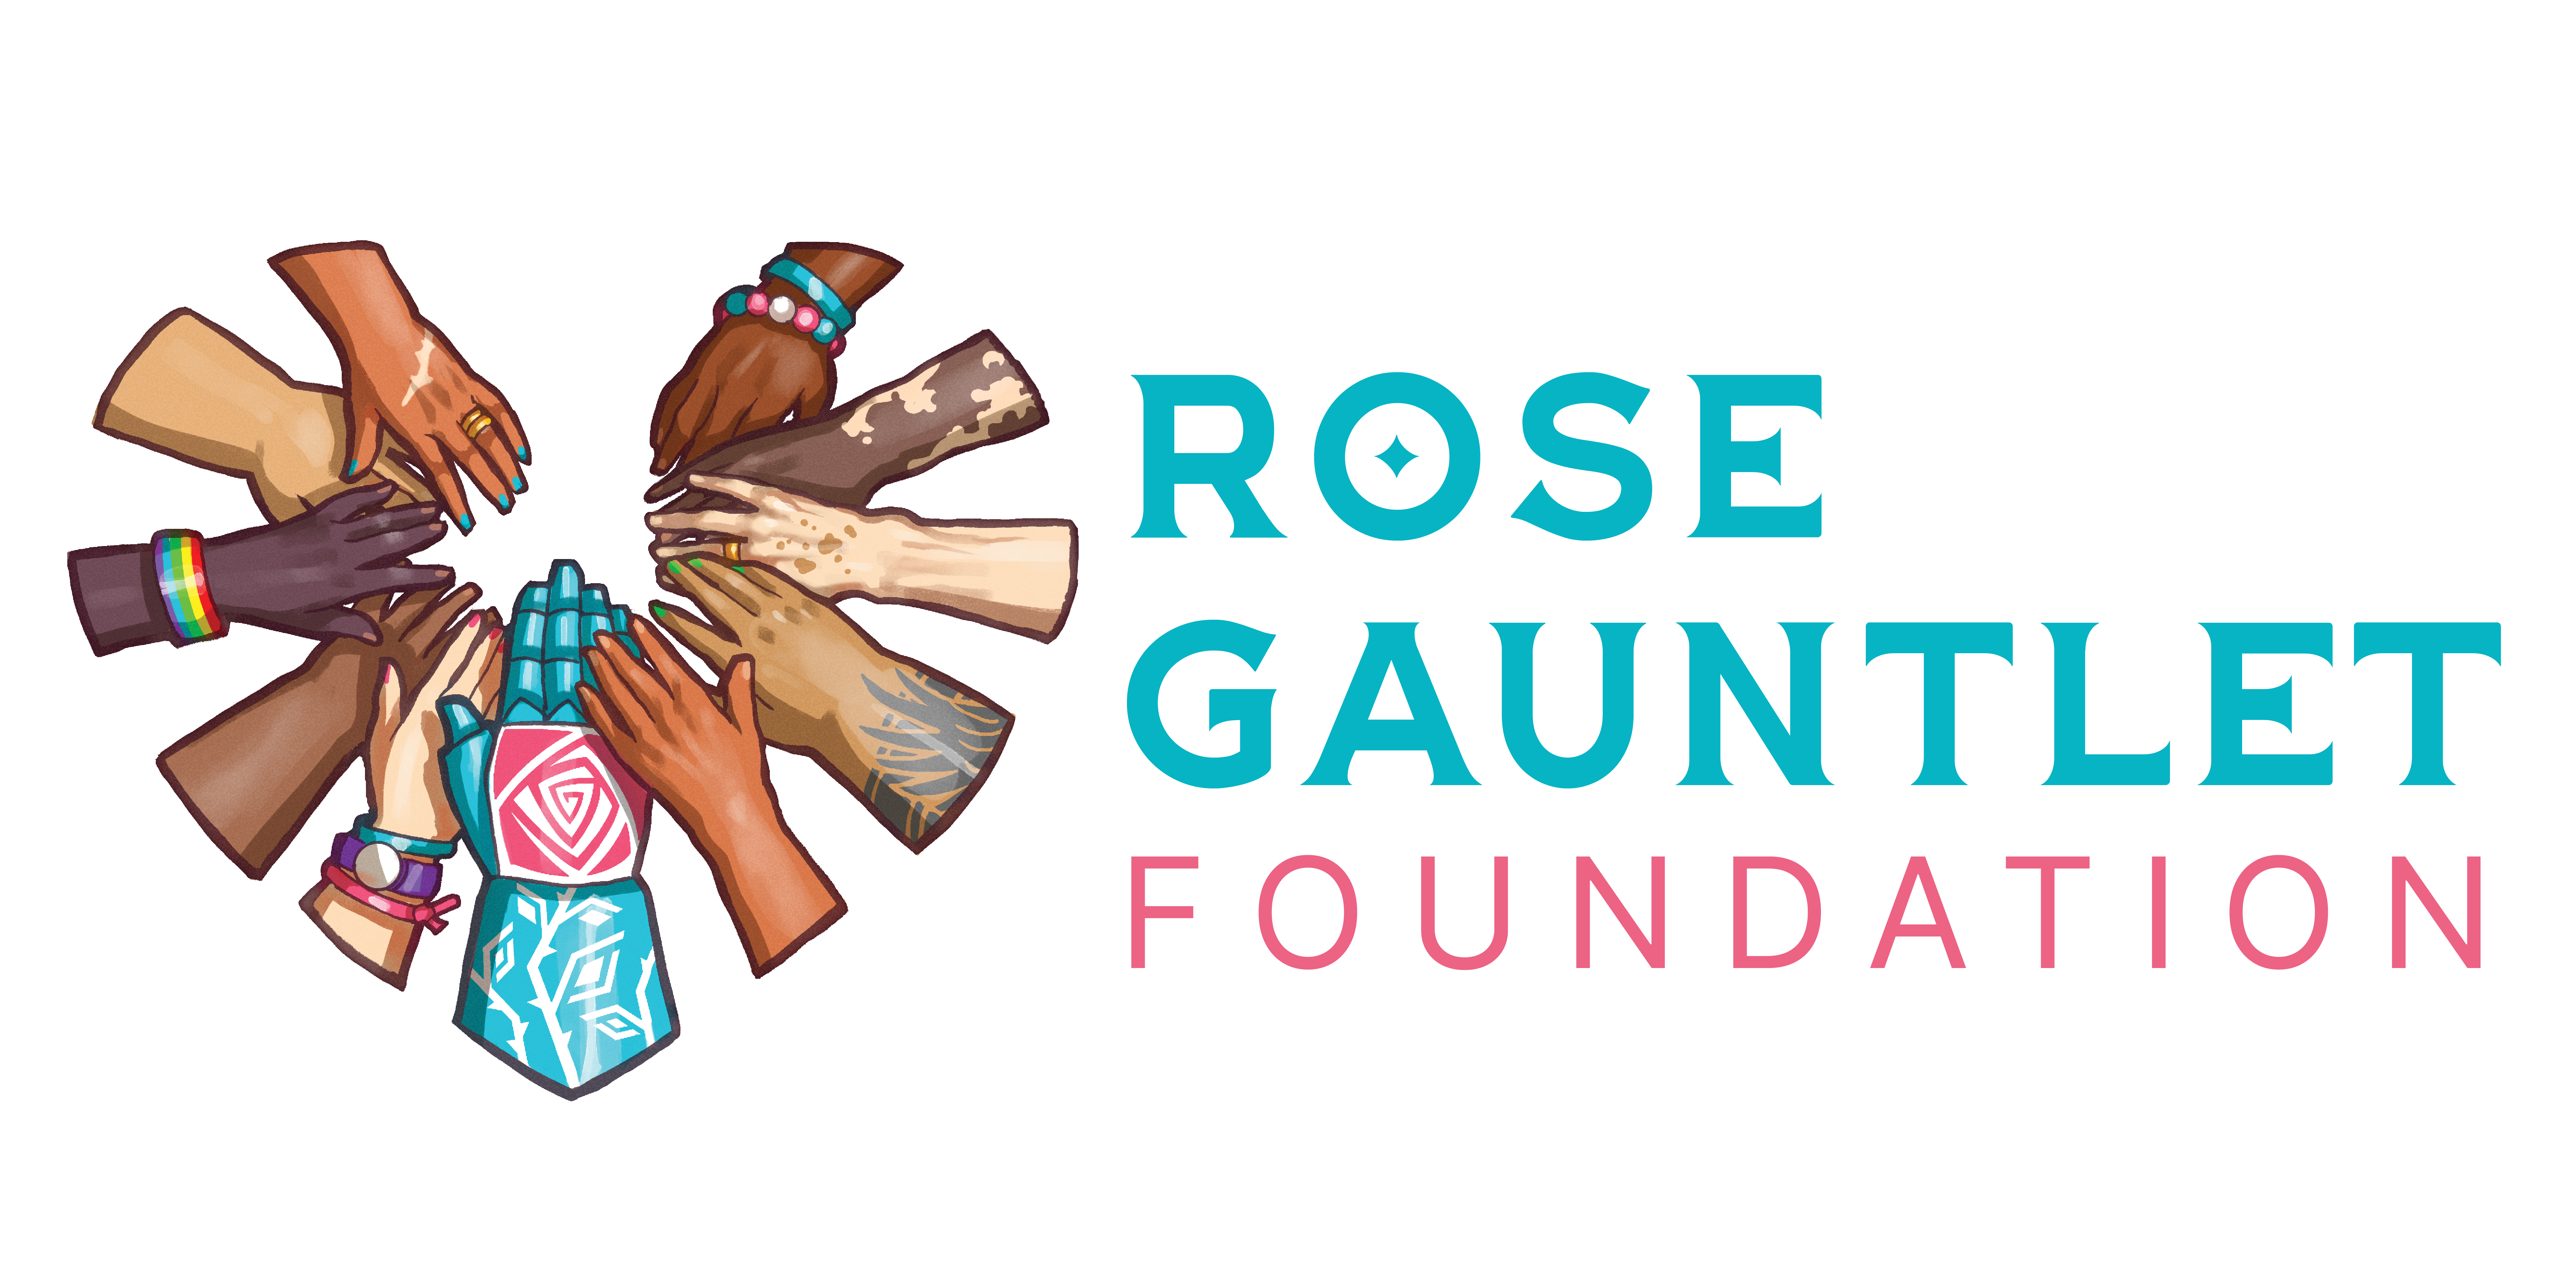 The Rose Gauntlet Foundation